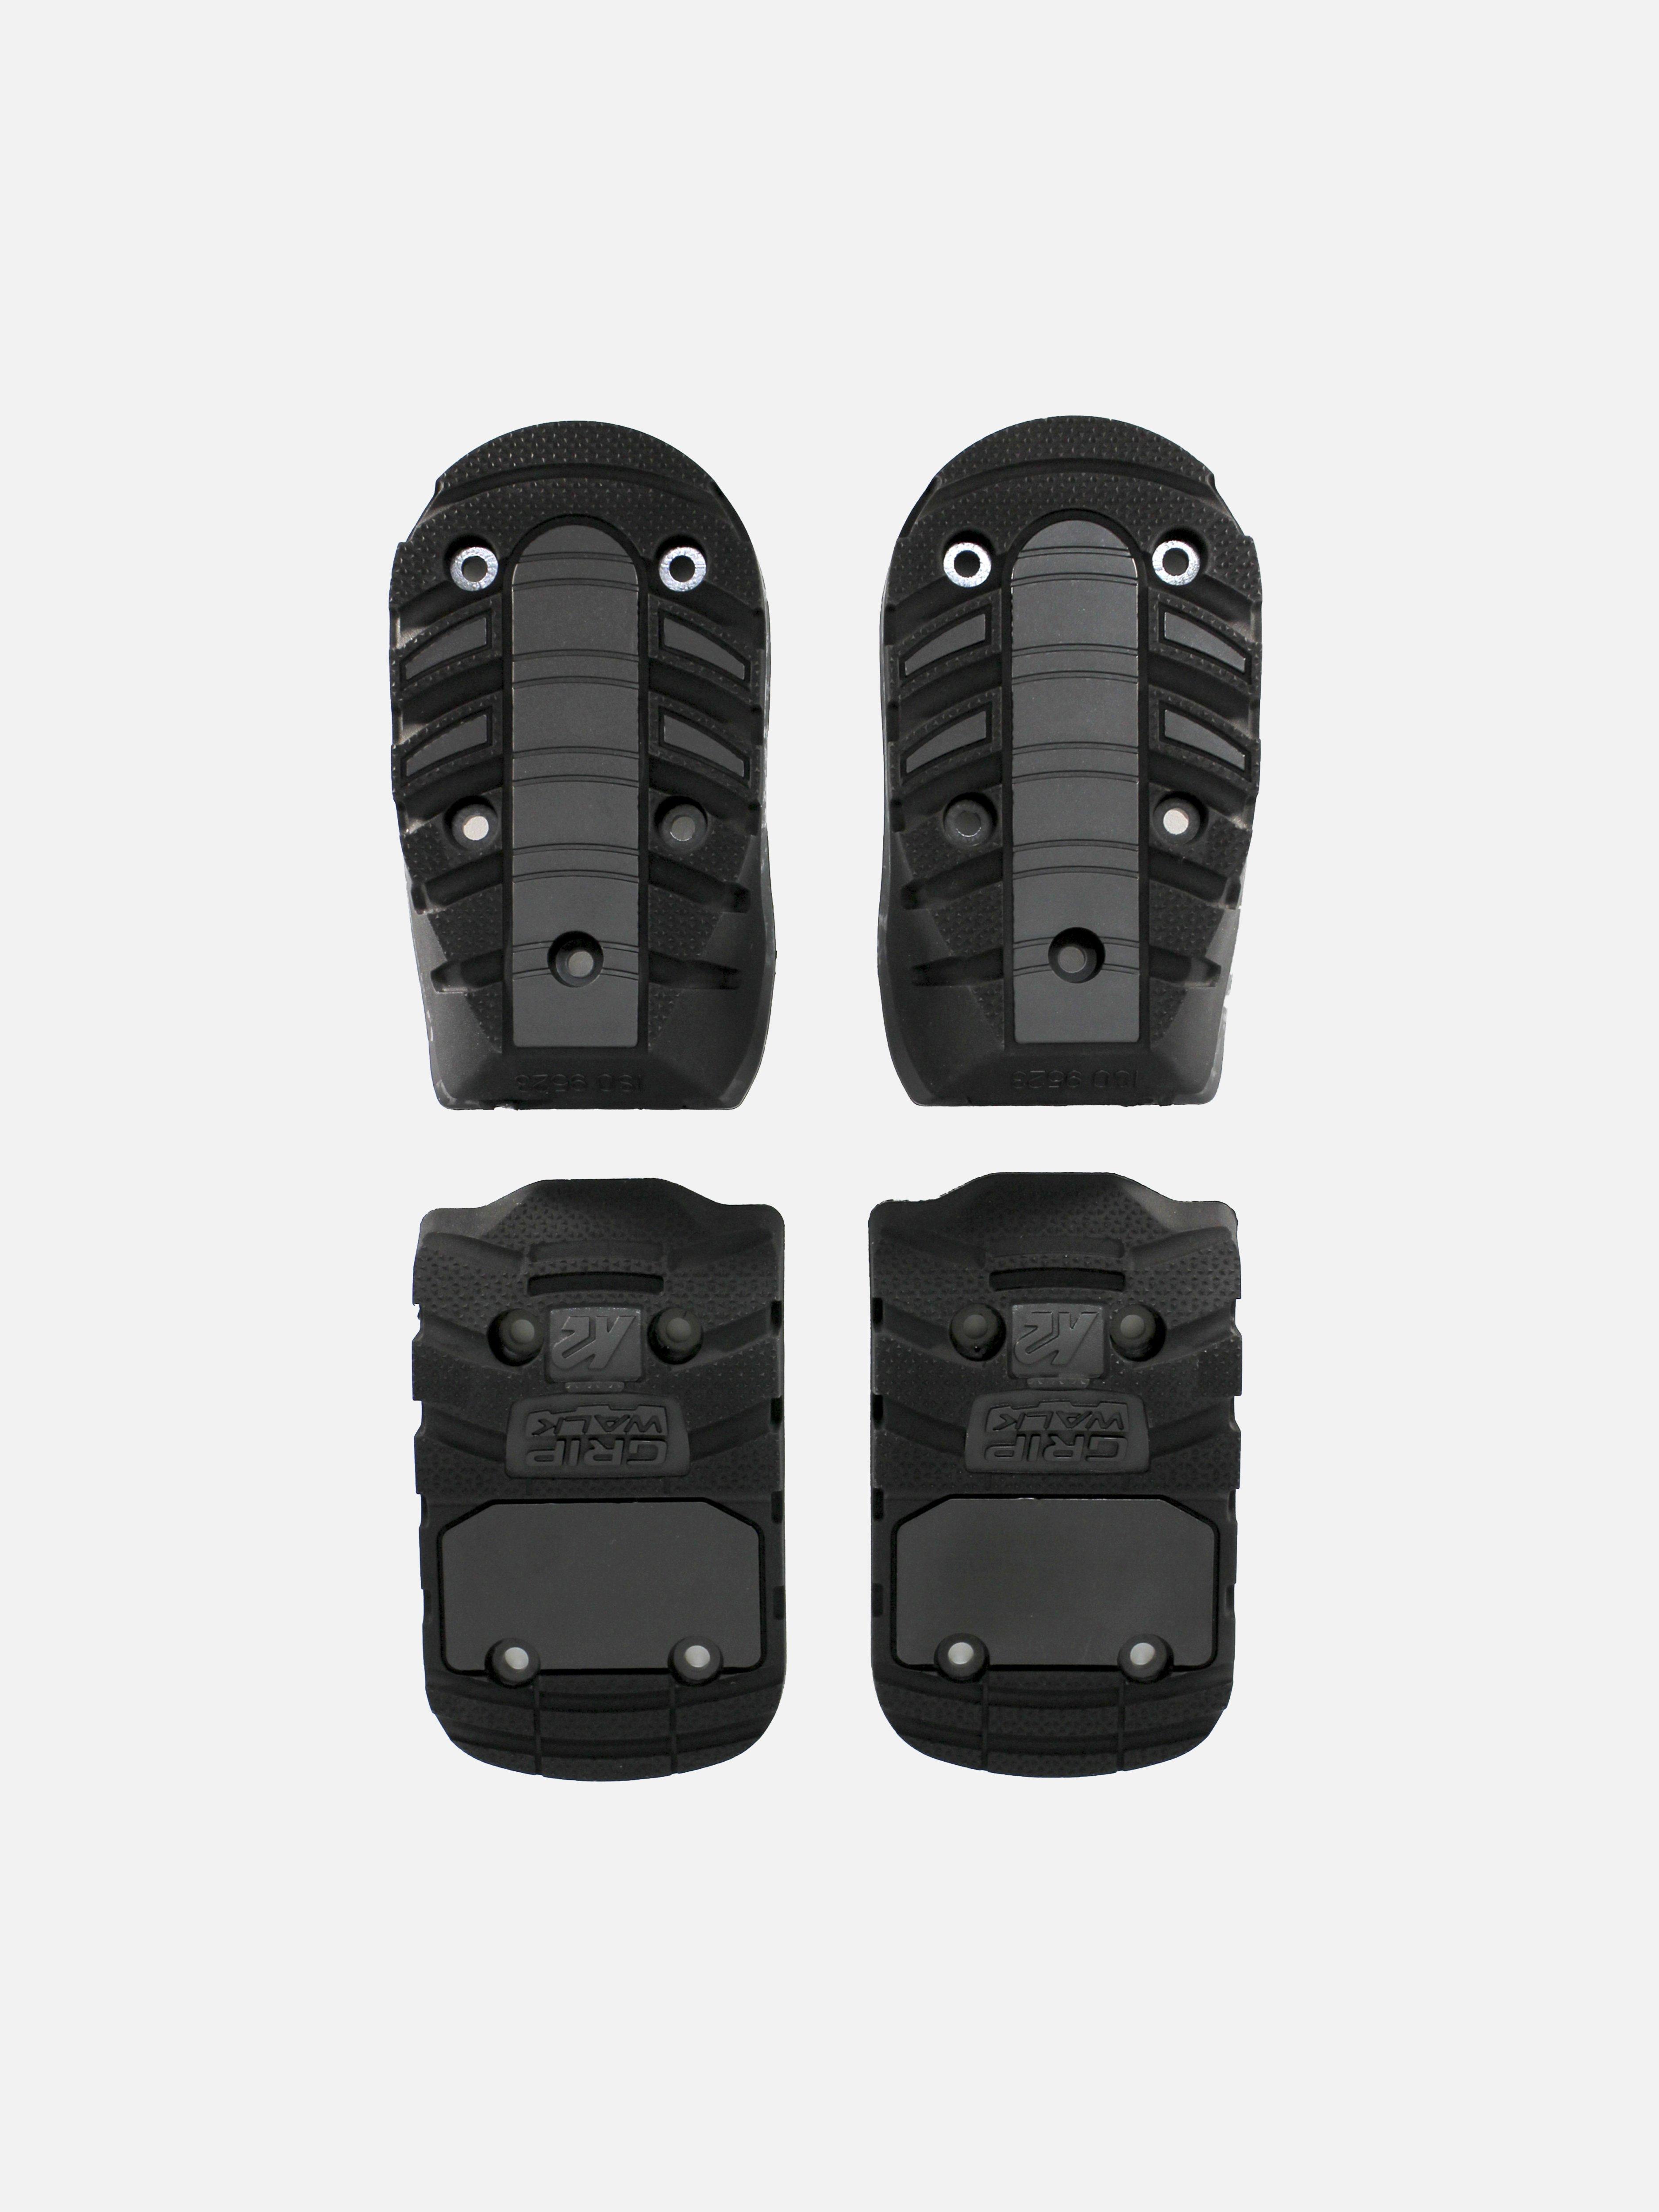 K2 Spyne/Spyre Small Grip Walk Outsoles